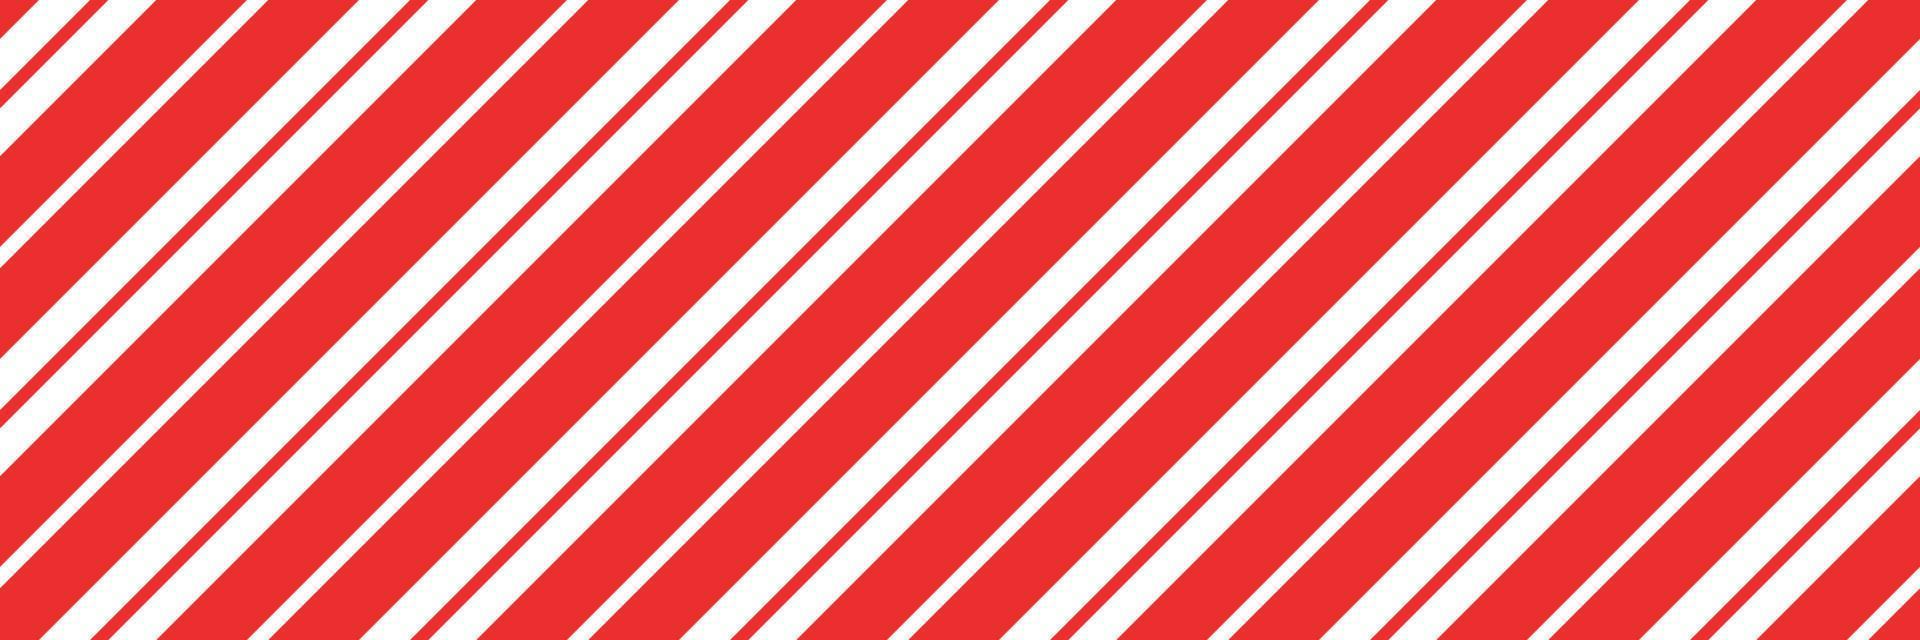 bastón de caramelo de navidad a rayas de patrones sin fisuras. fondo de bastón de caramelo de navidad con rayas rojas. estampado diagonal caramelo. textura de envoltura tradicional de navidad. ilustración vectorial vector